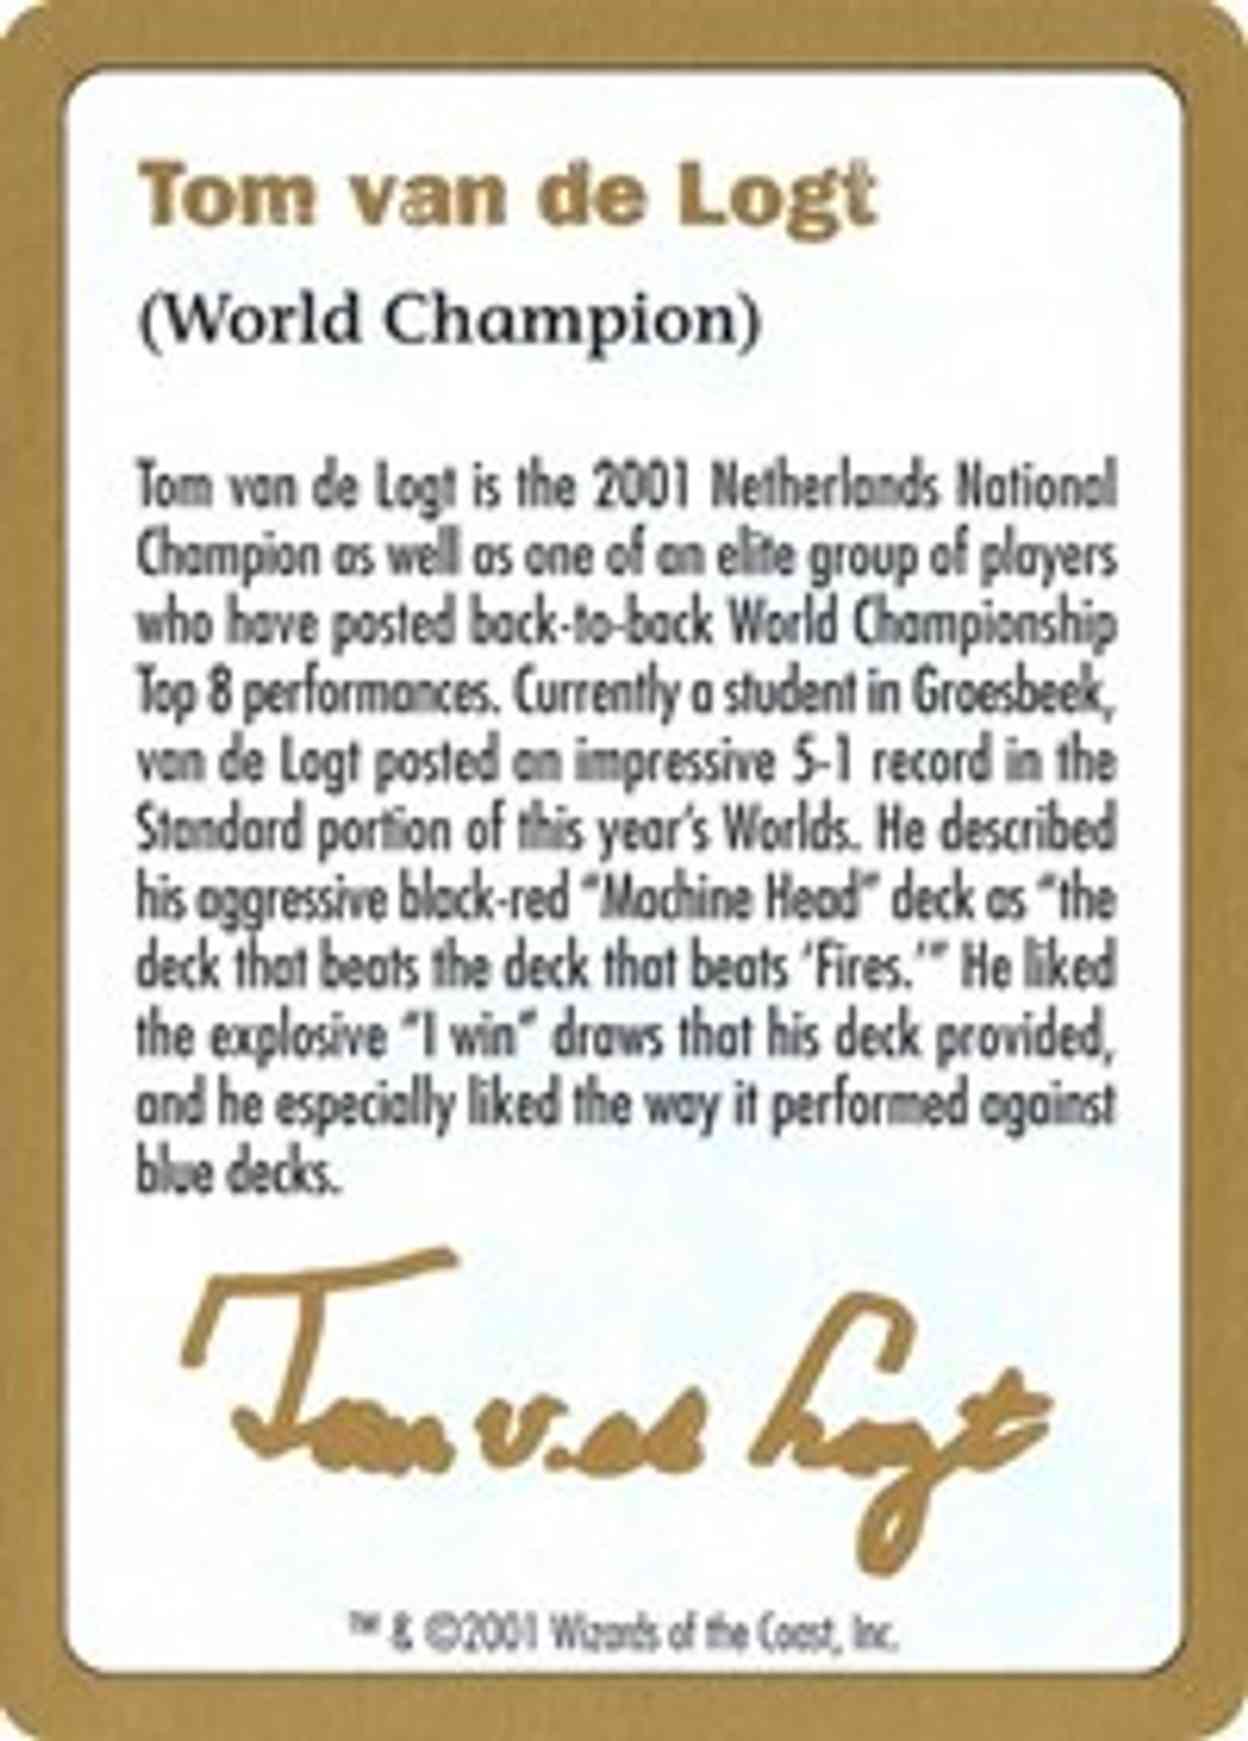 2001 Tom van de Logt Biography Card magic card front